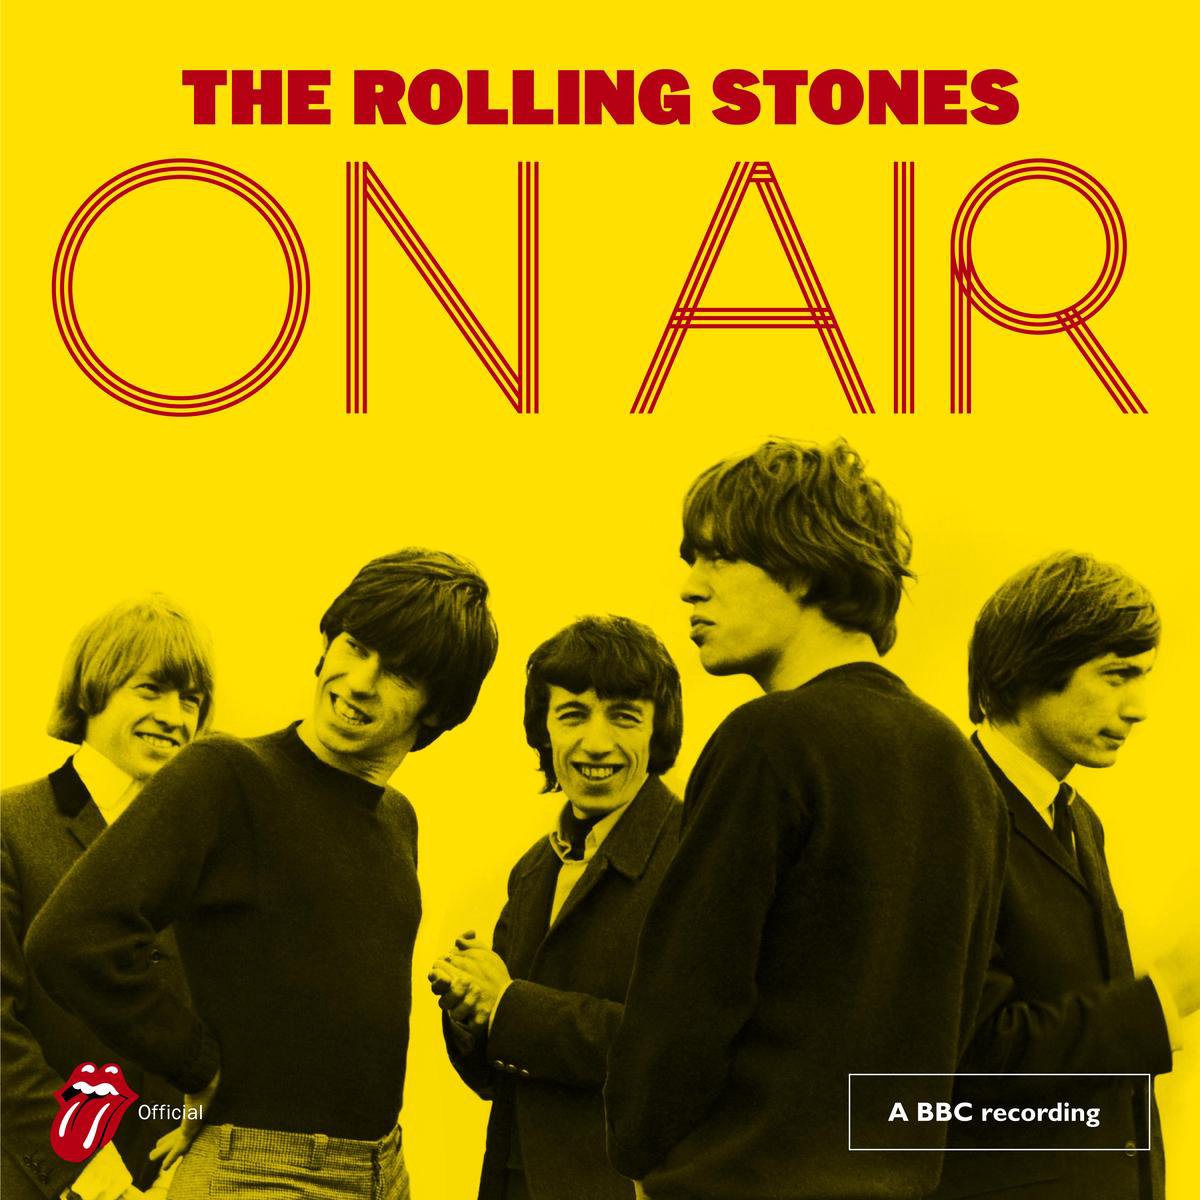 The Rolling Stones - On Air (Deluxe Edition), Rolling Stones | CD (album) | Muziek bol.com